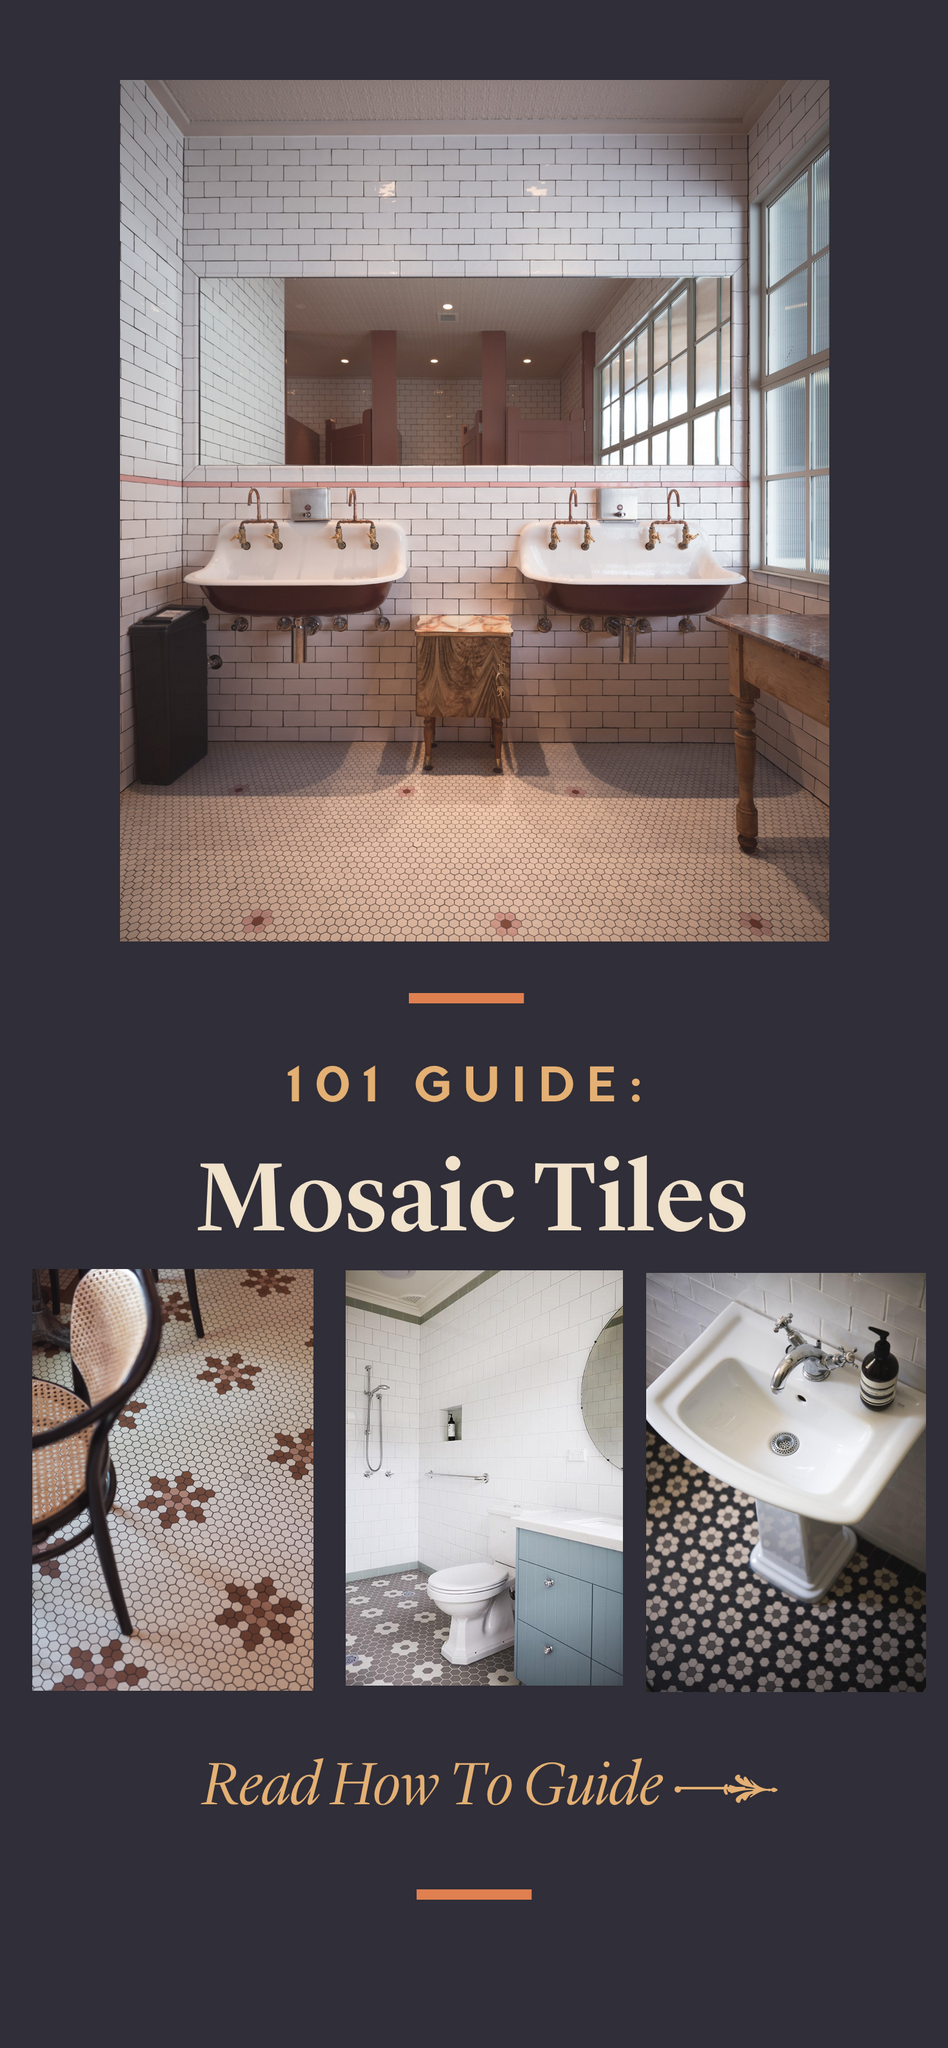 A guide to choosing mosaic tiles